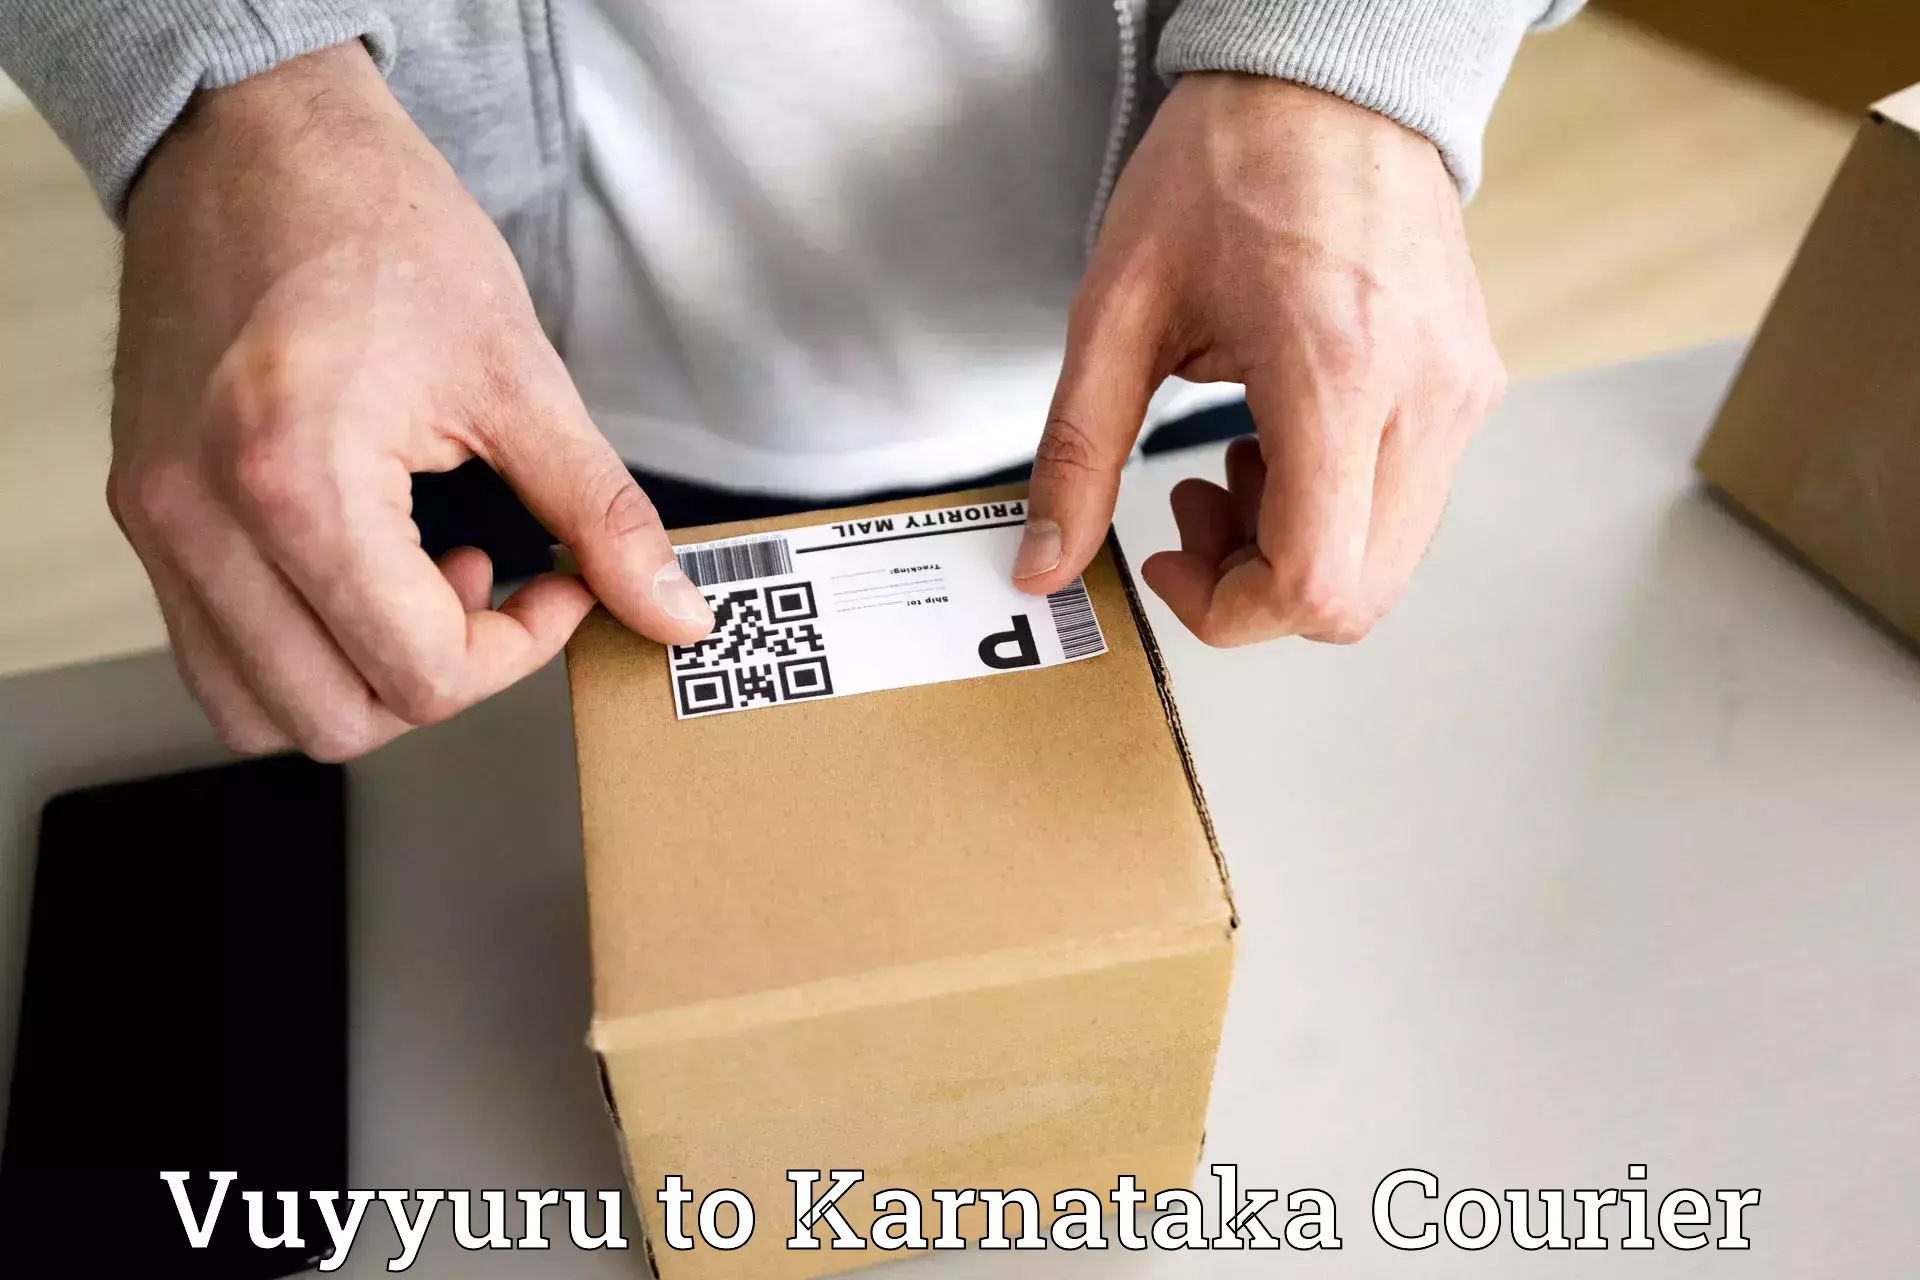 Lightweight parcel options Vuyyuru to Mandya